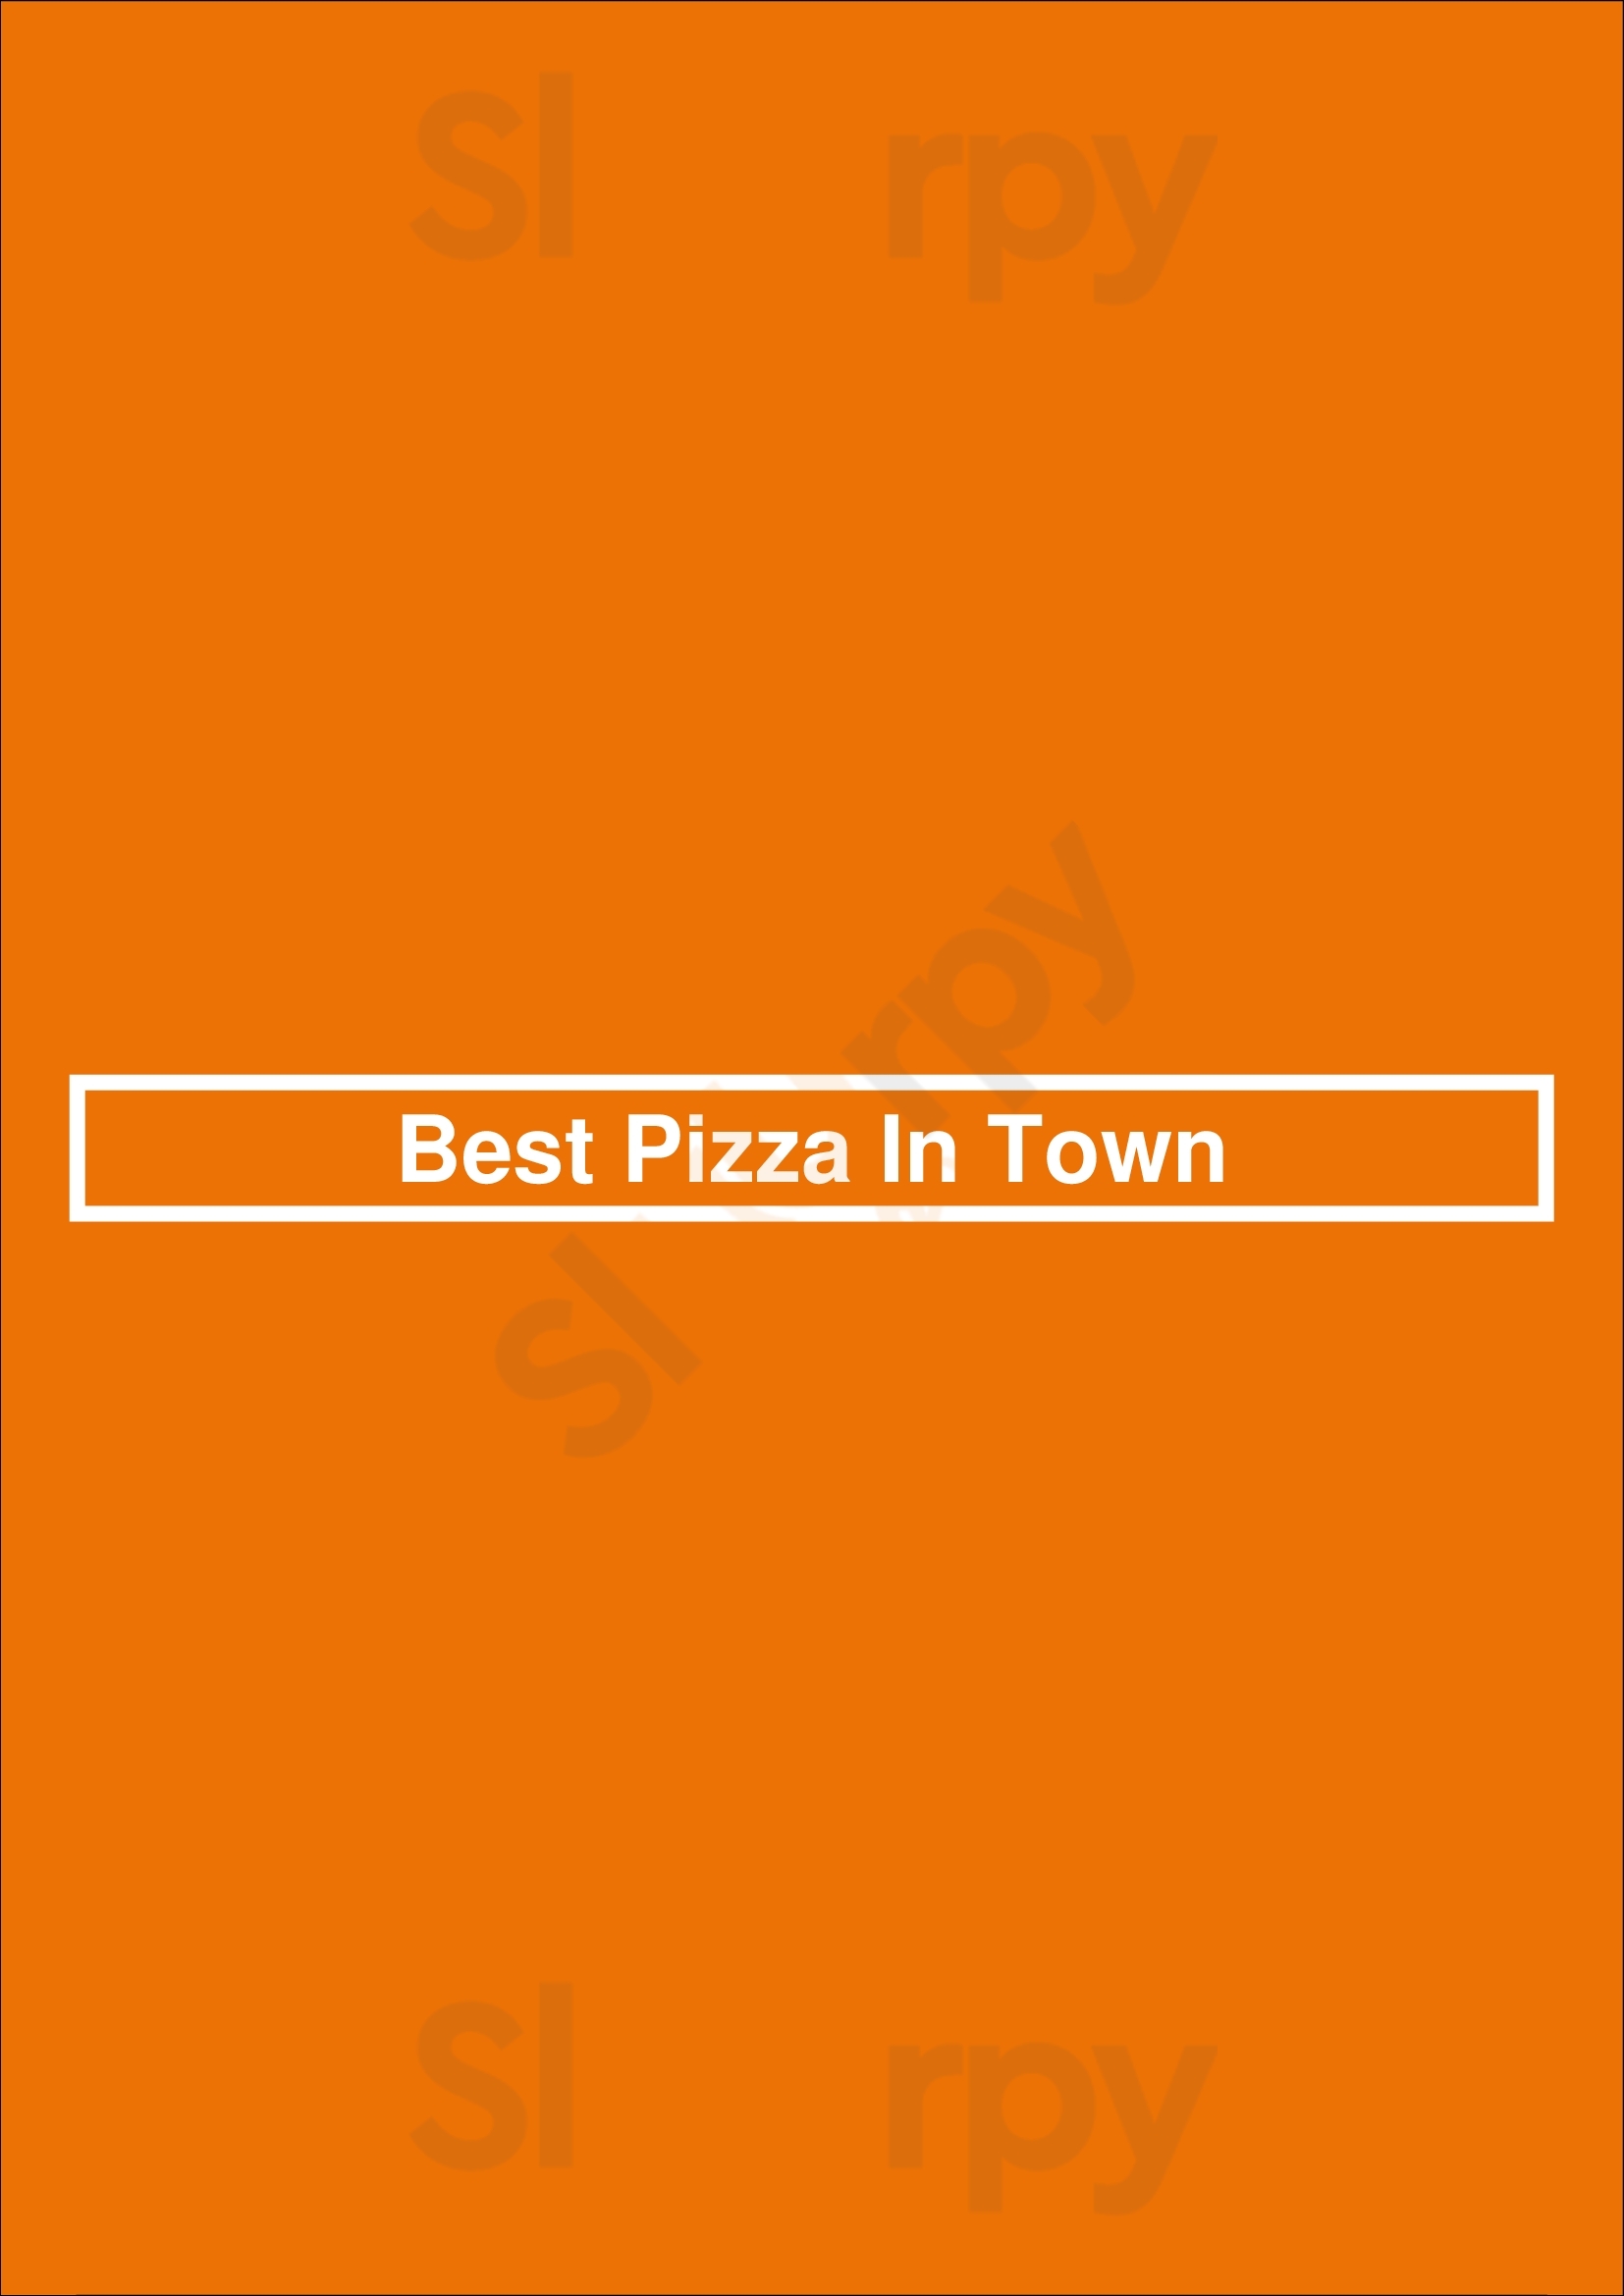 Best Pizza In Town Newmarket Menu - 1